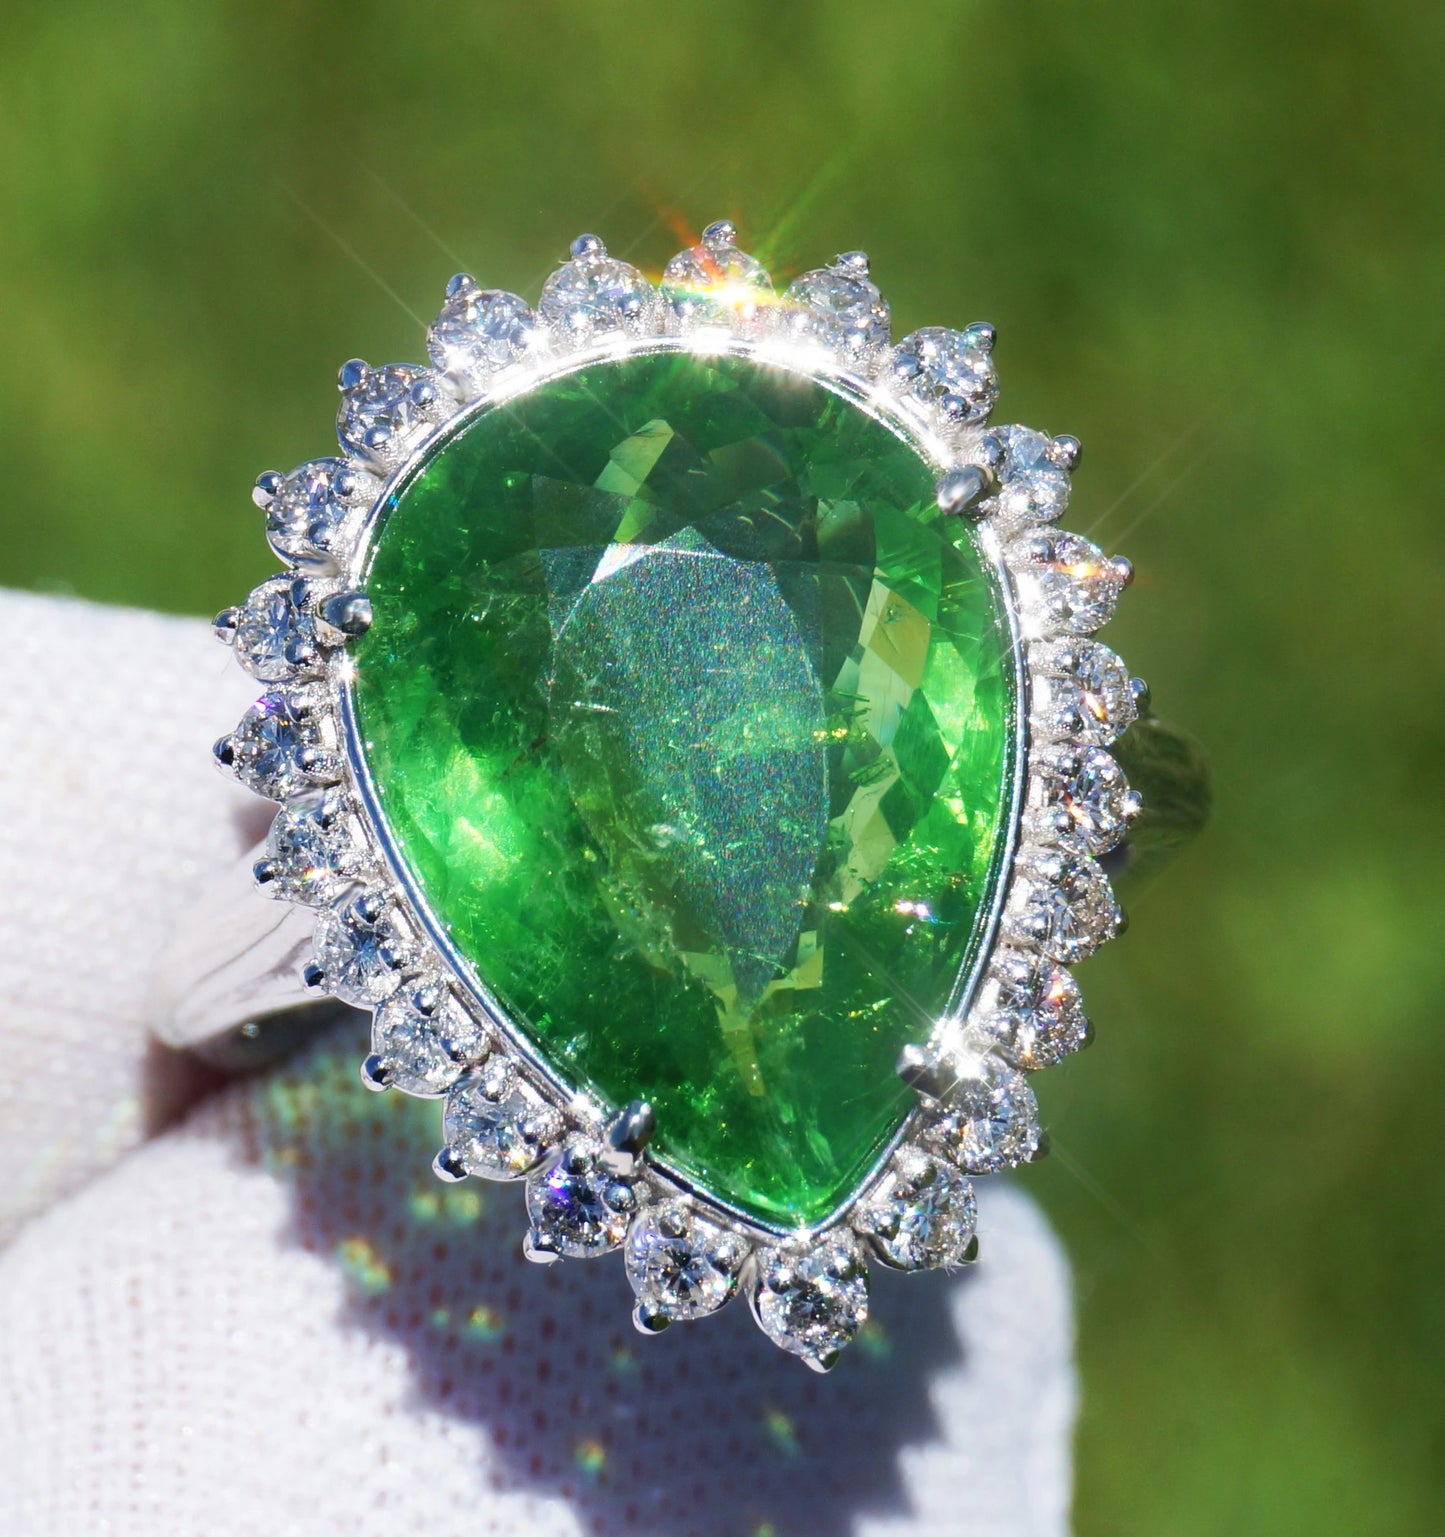 Green color Paraiba tourmaline copper bearing & diamond white 14k gold ring gia certified 7.84ctw pear cut